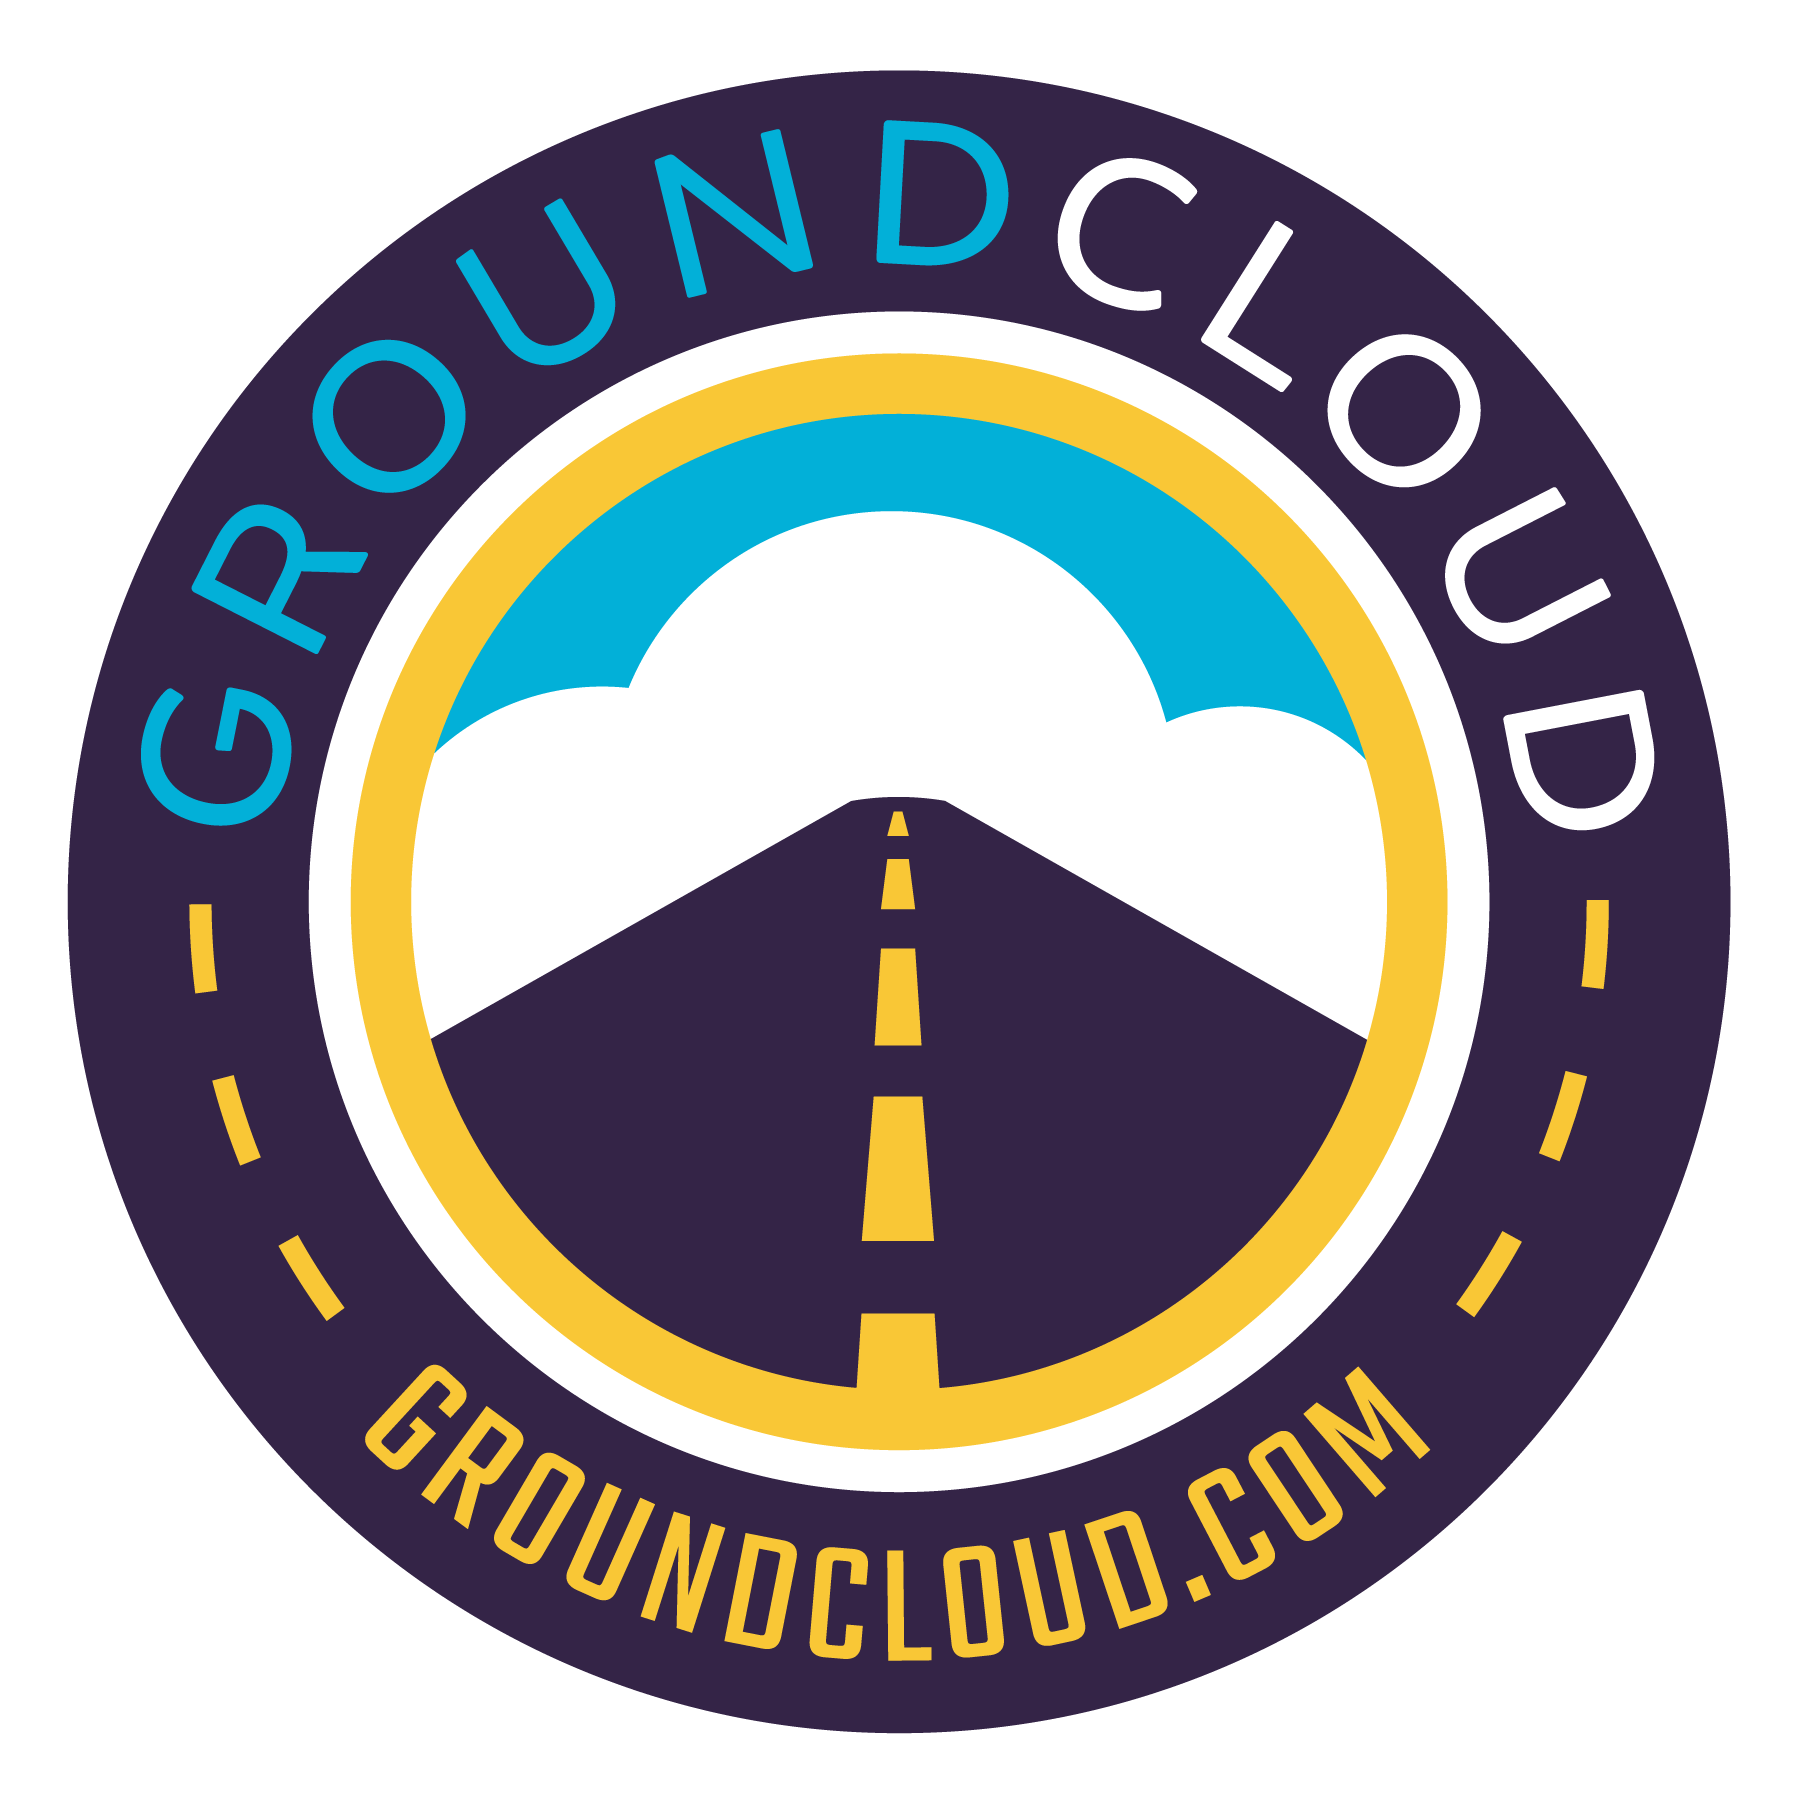 GroundCloud (Copy)